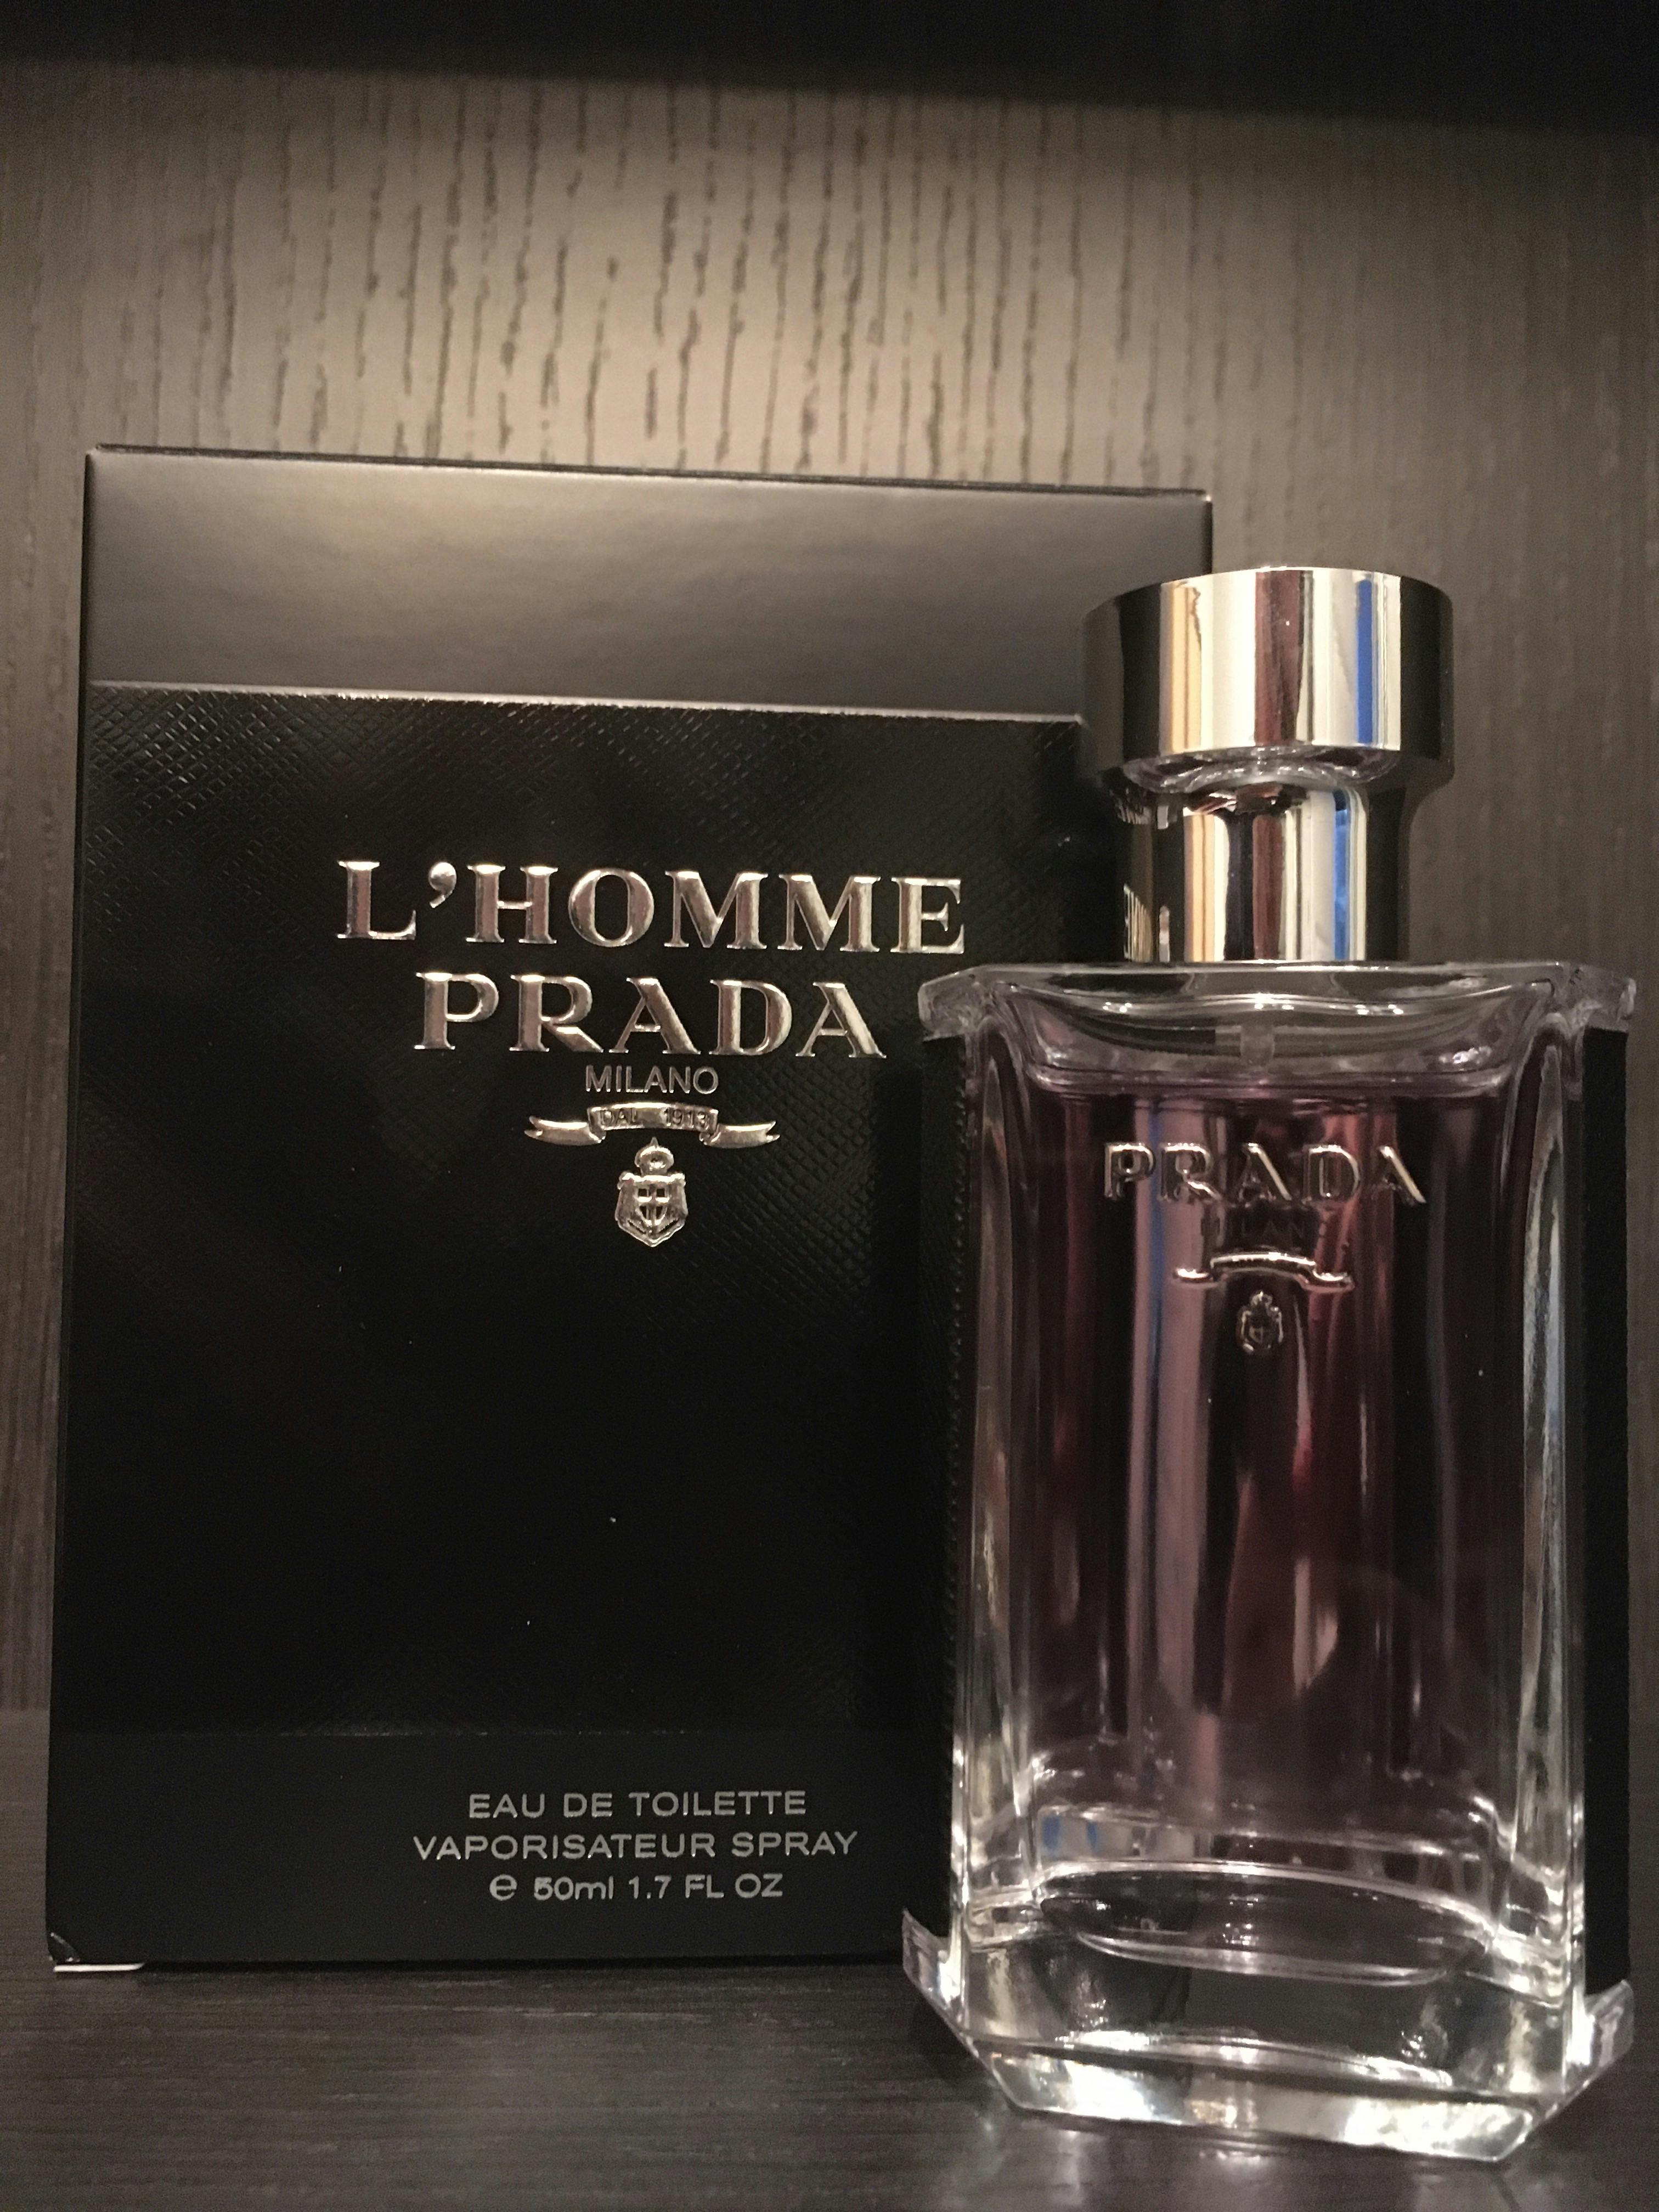 Buy Prada L'Homme perfume online at discounted price 